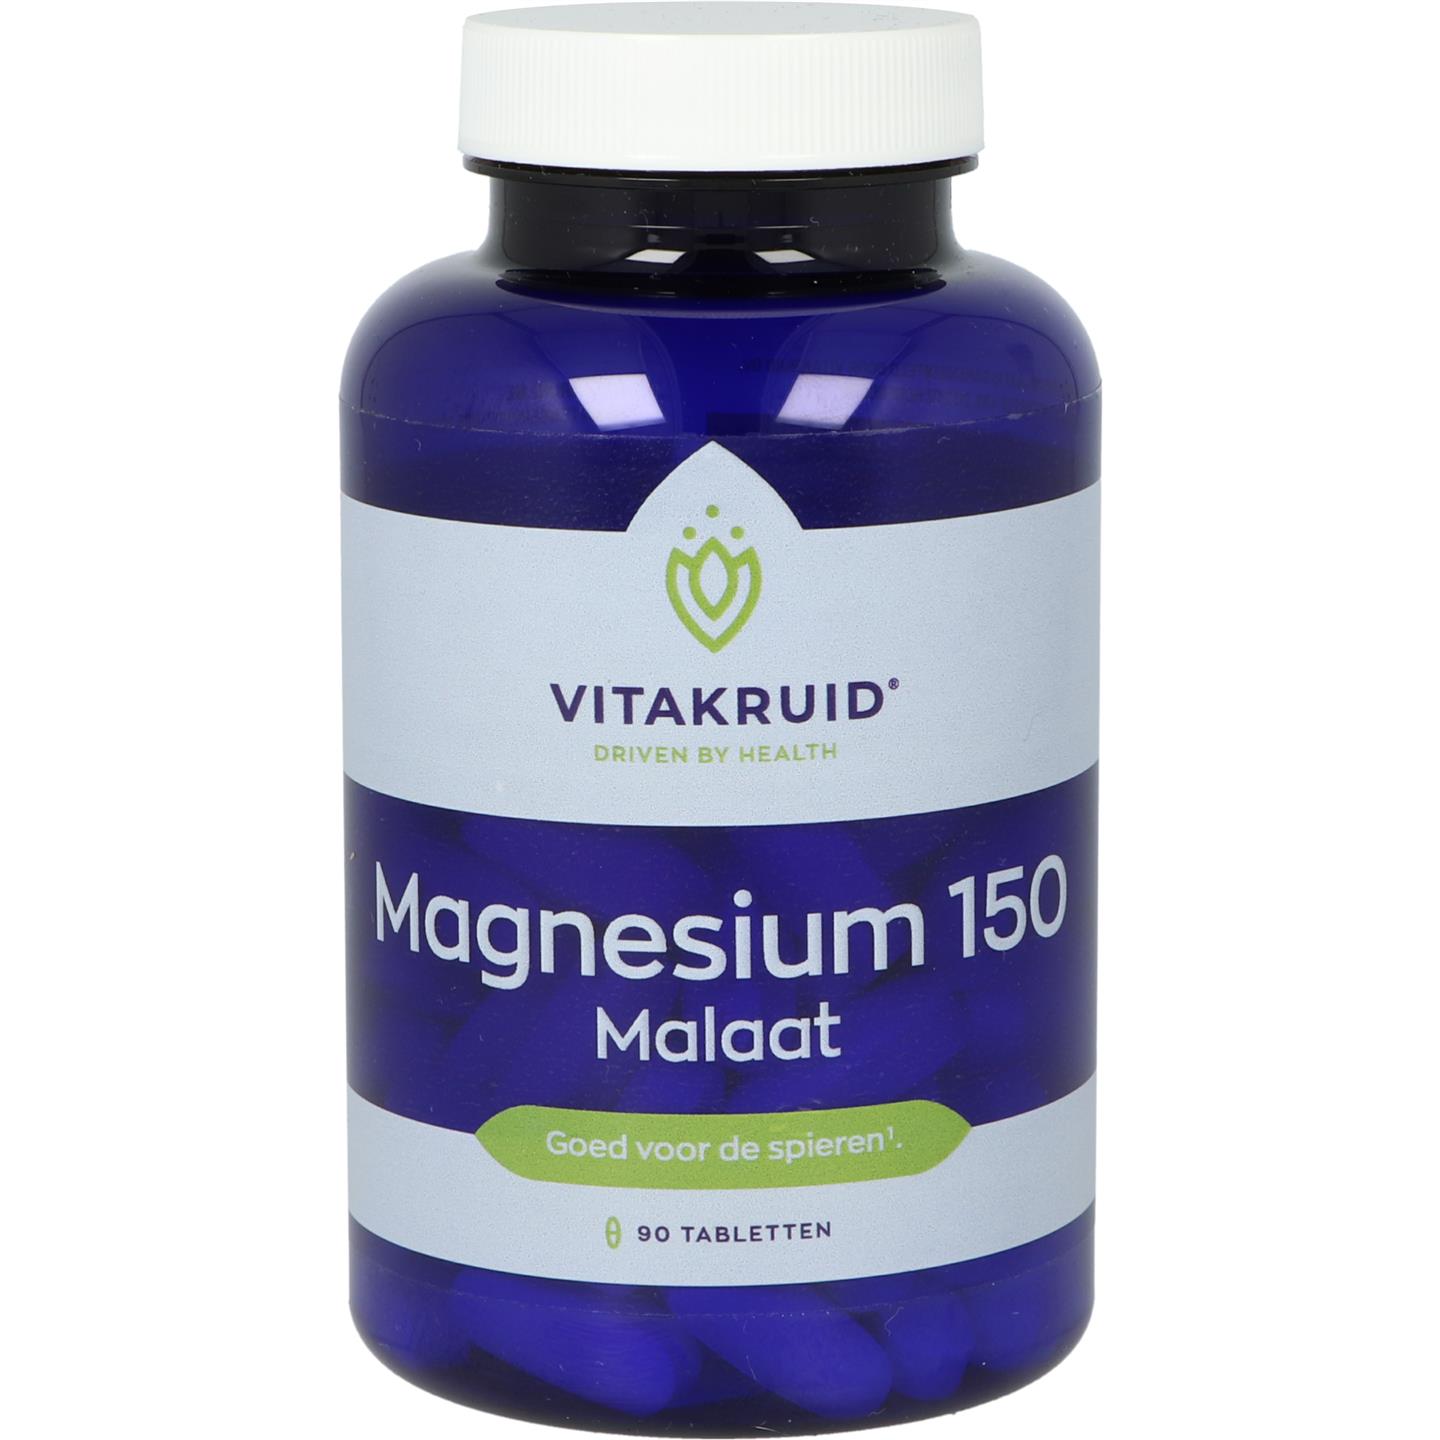 Magnesium 150 Malaat